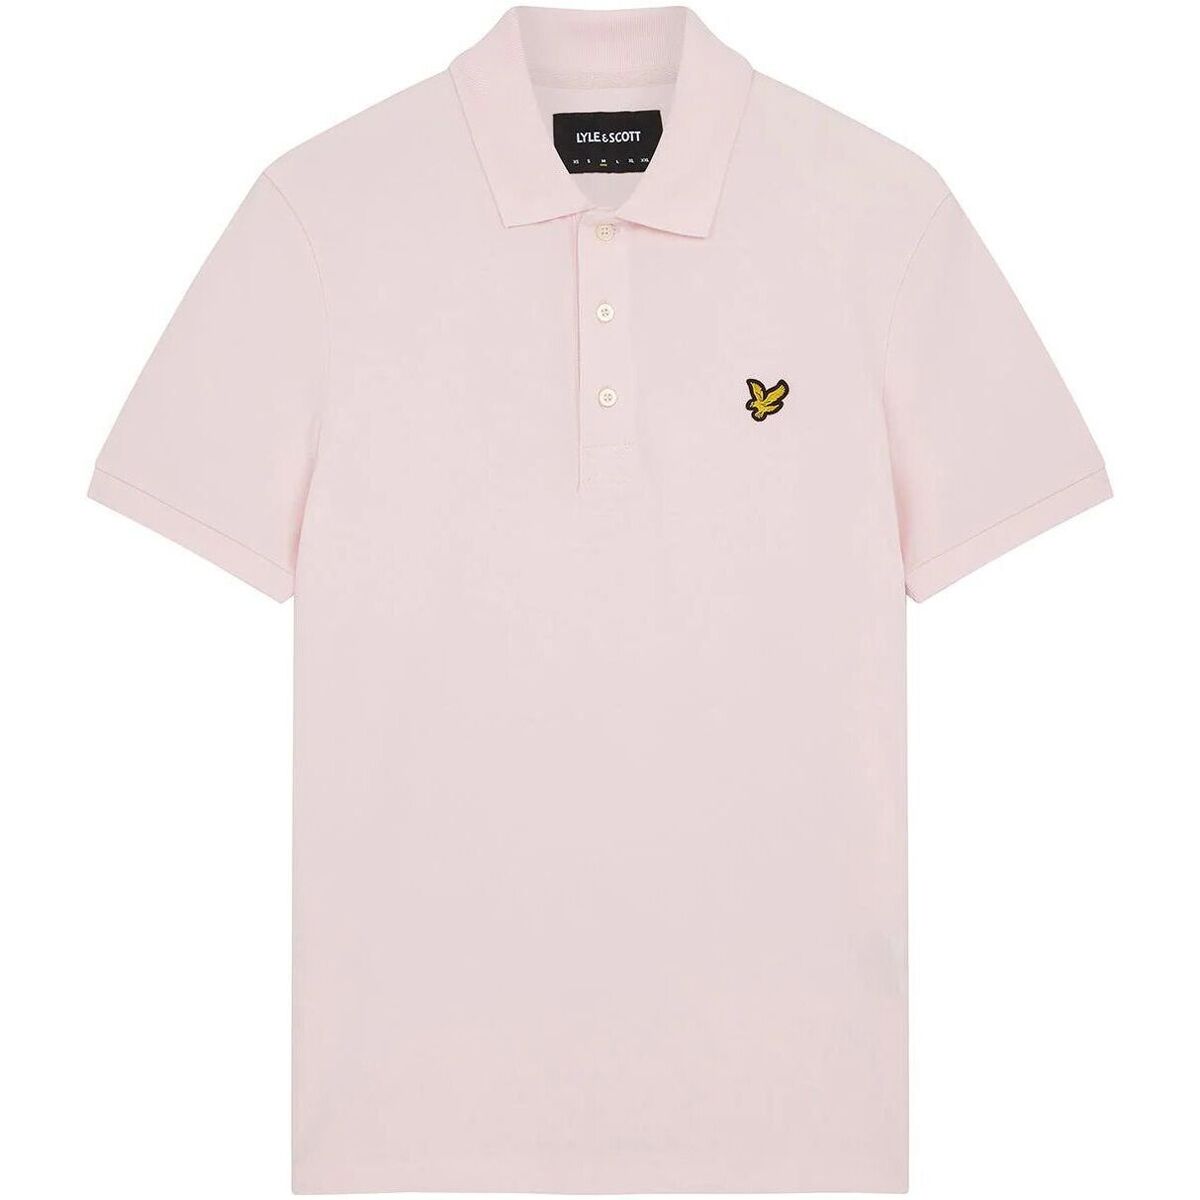 Kleidung Herren T-Shirts & Poloshirts Lyle & Scott SP400VOG POLO SHIRT-W488 LIGHT PINK Rosa